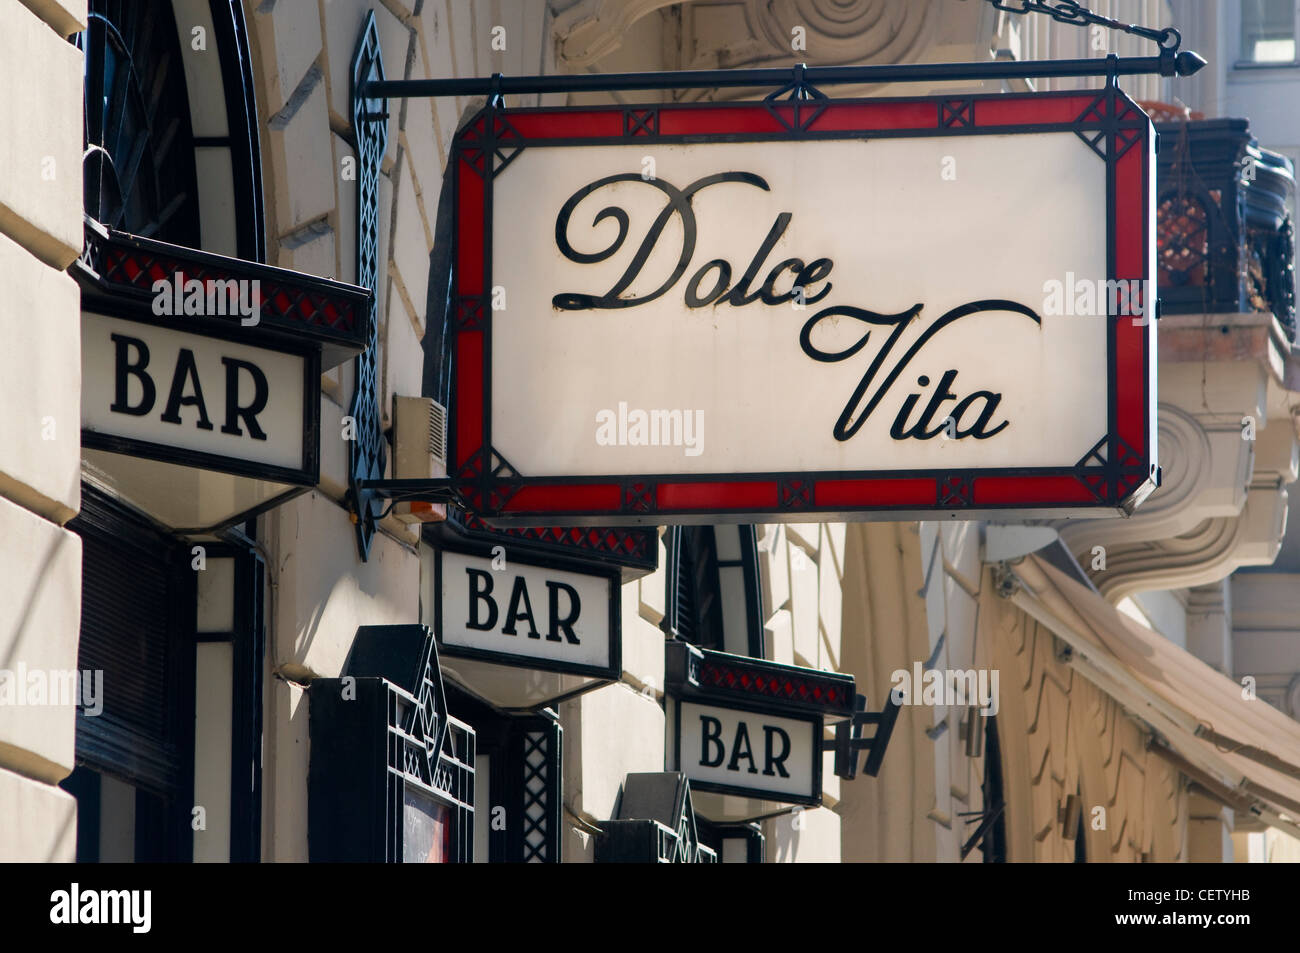 Dolce vita sign.  Bar in Budapest Stock Photo